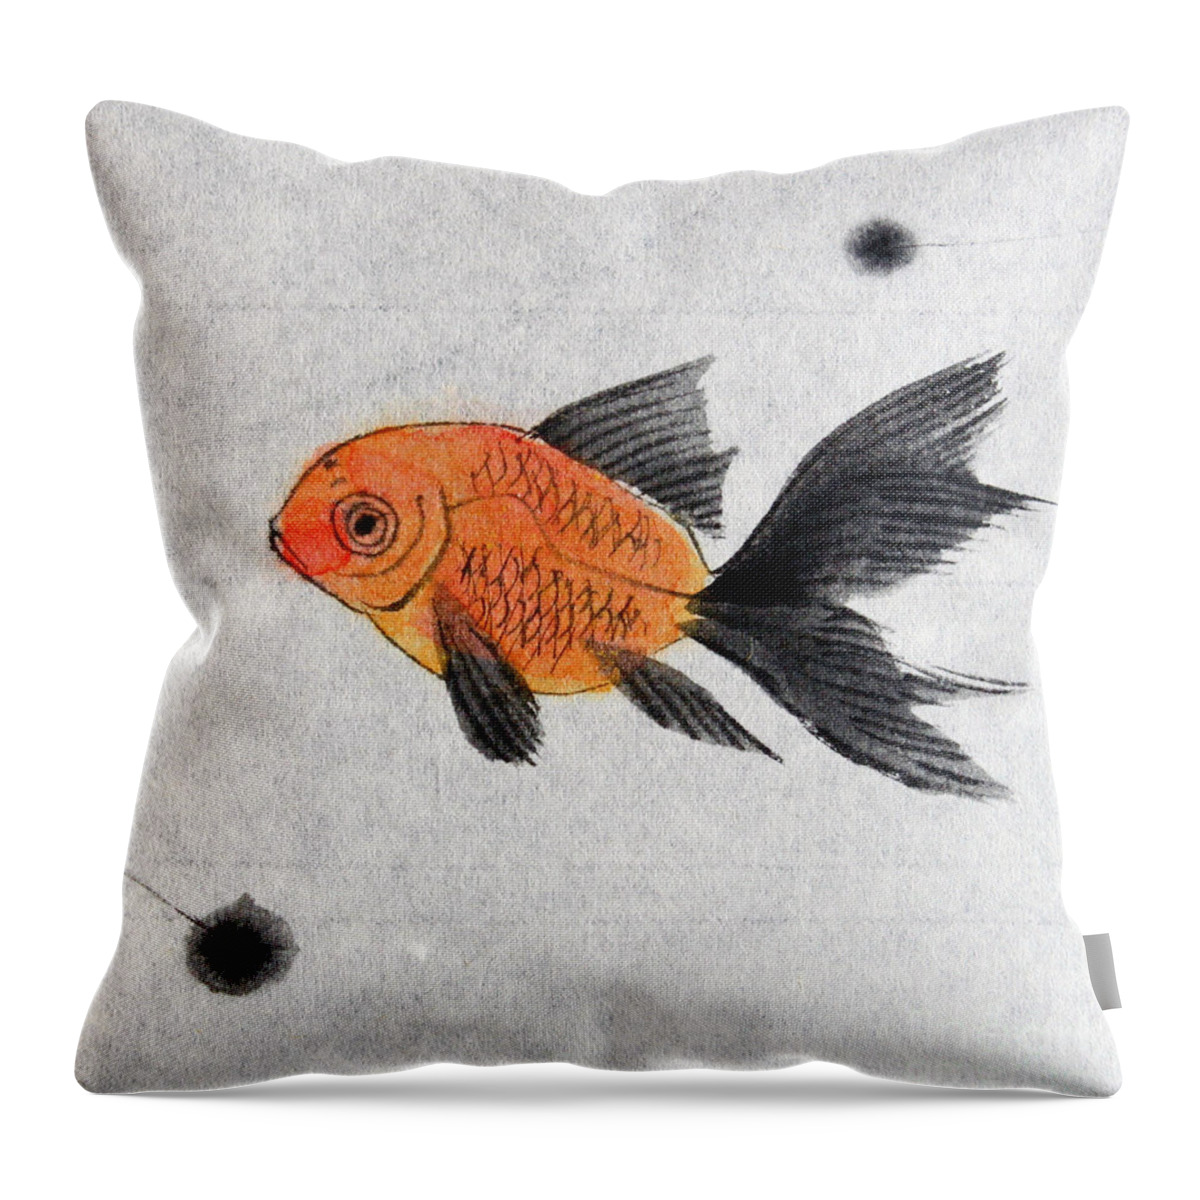 Fish Throw Pillow featuring the painting Floating by Fumiyo Yoshikawa